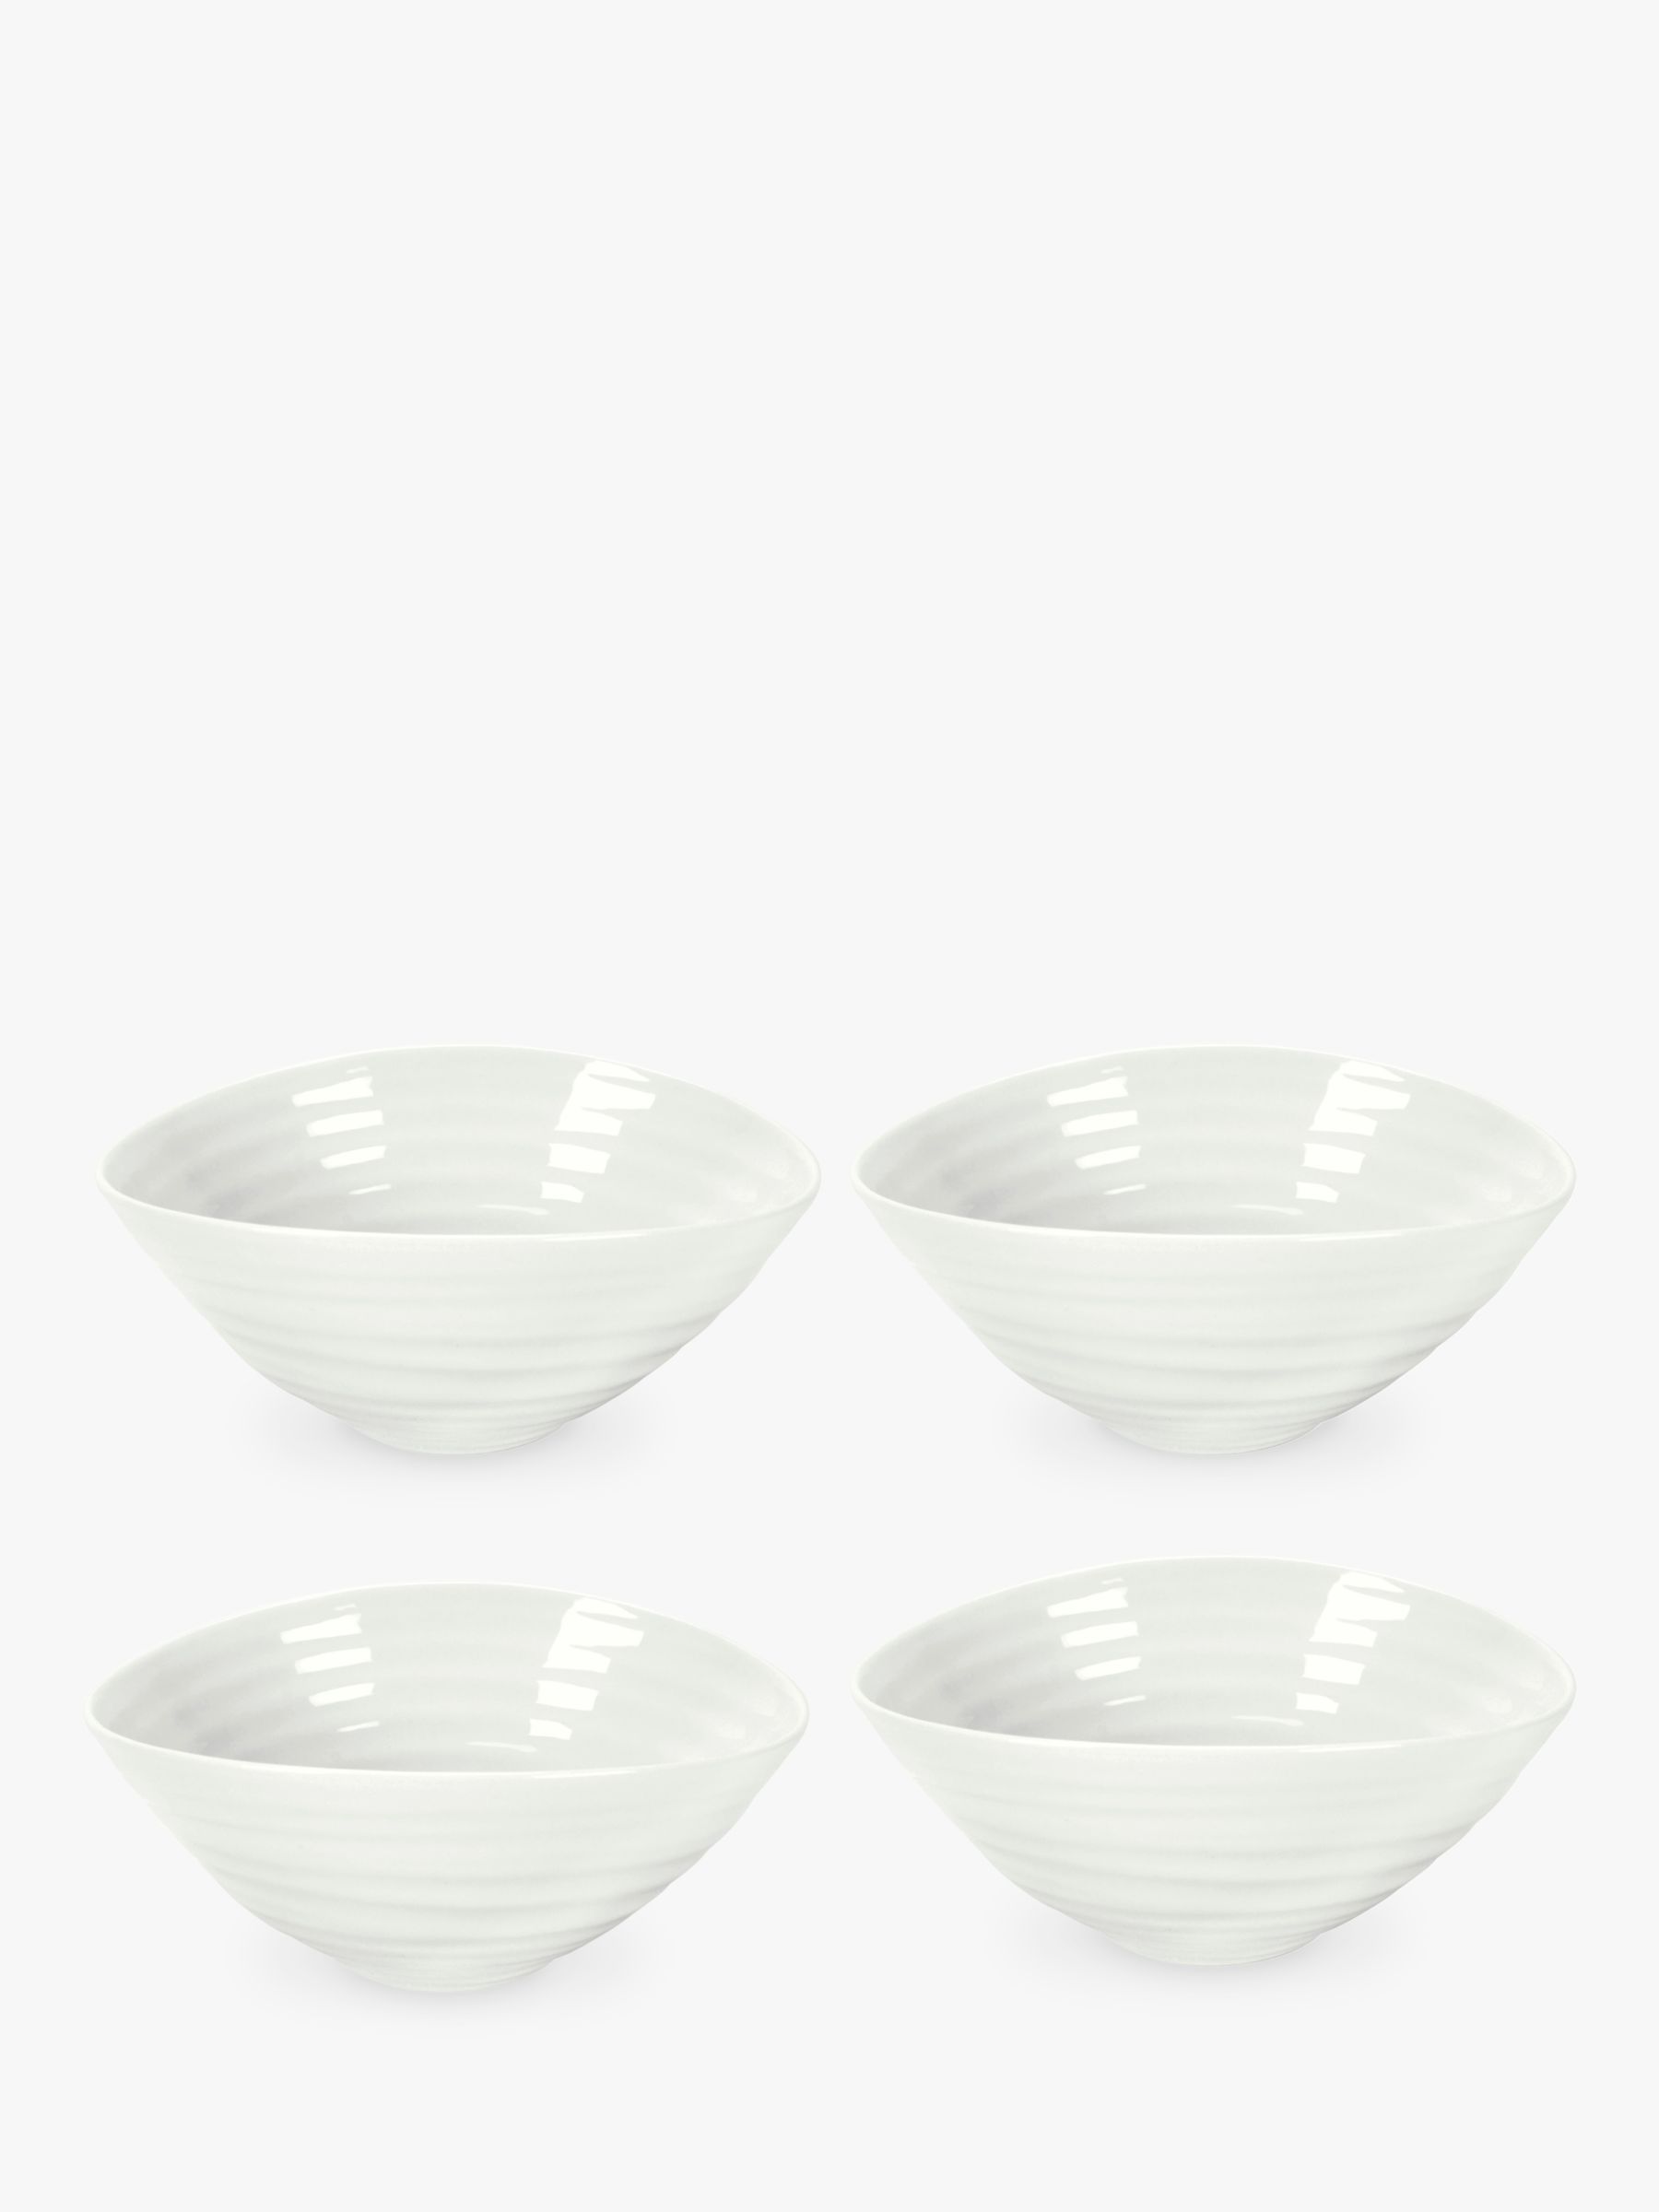 Sophie Conran for Portmeirion Dessert Dishes, Set of 4, White, Dia.15cm